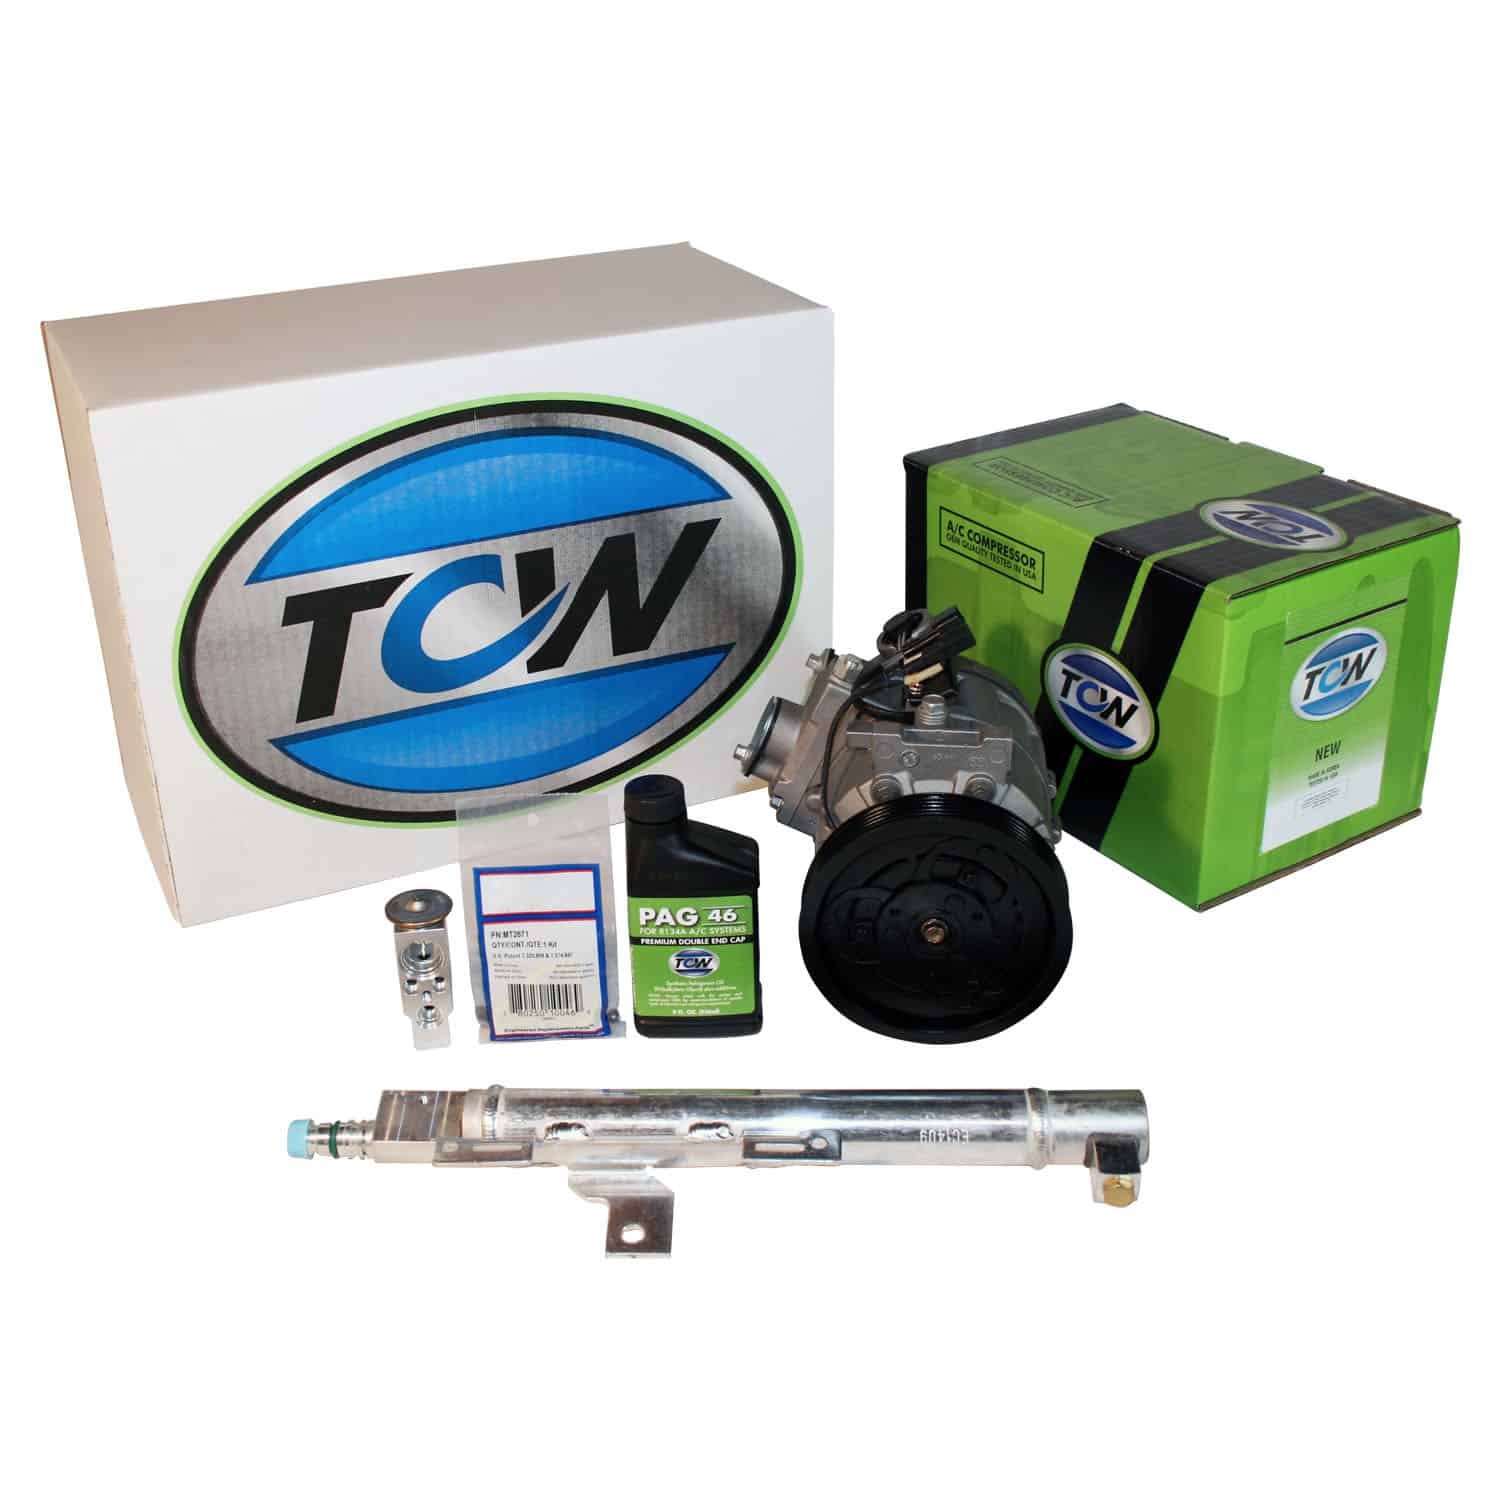 TCW Vehicle A/C Kit K1000478N New Product Image field_60b6a13a6e67c